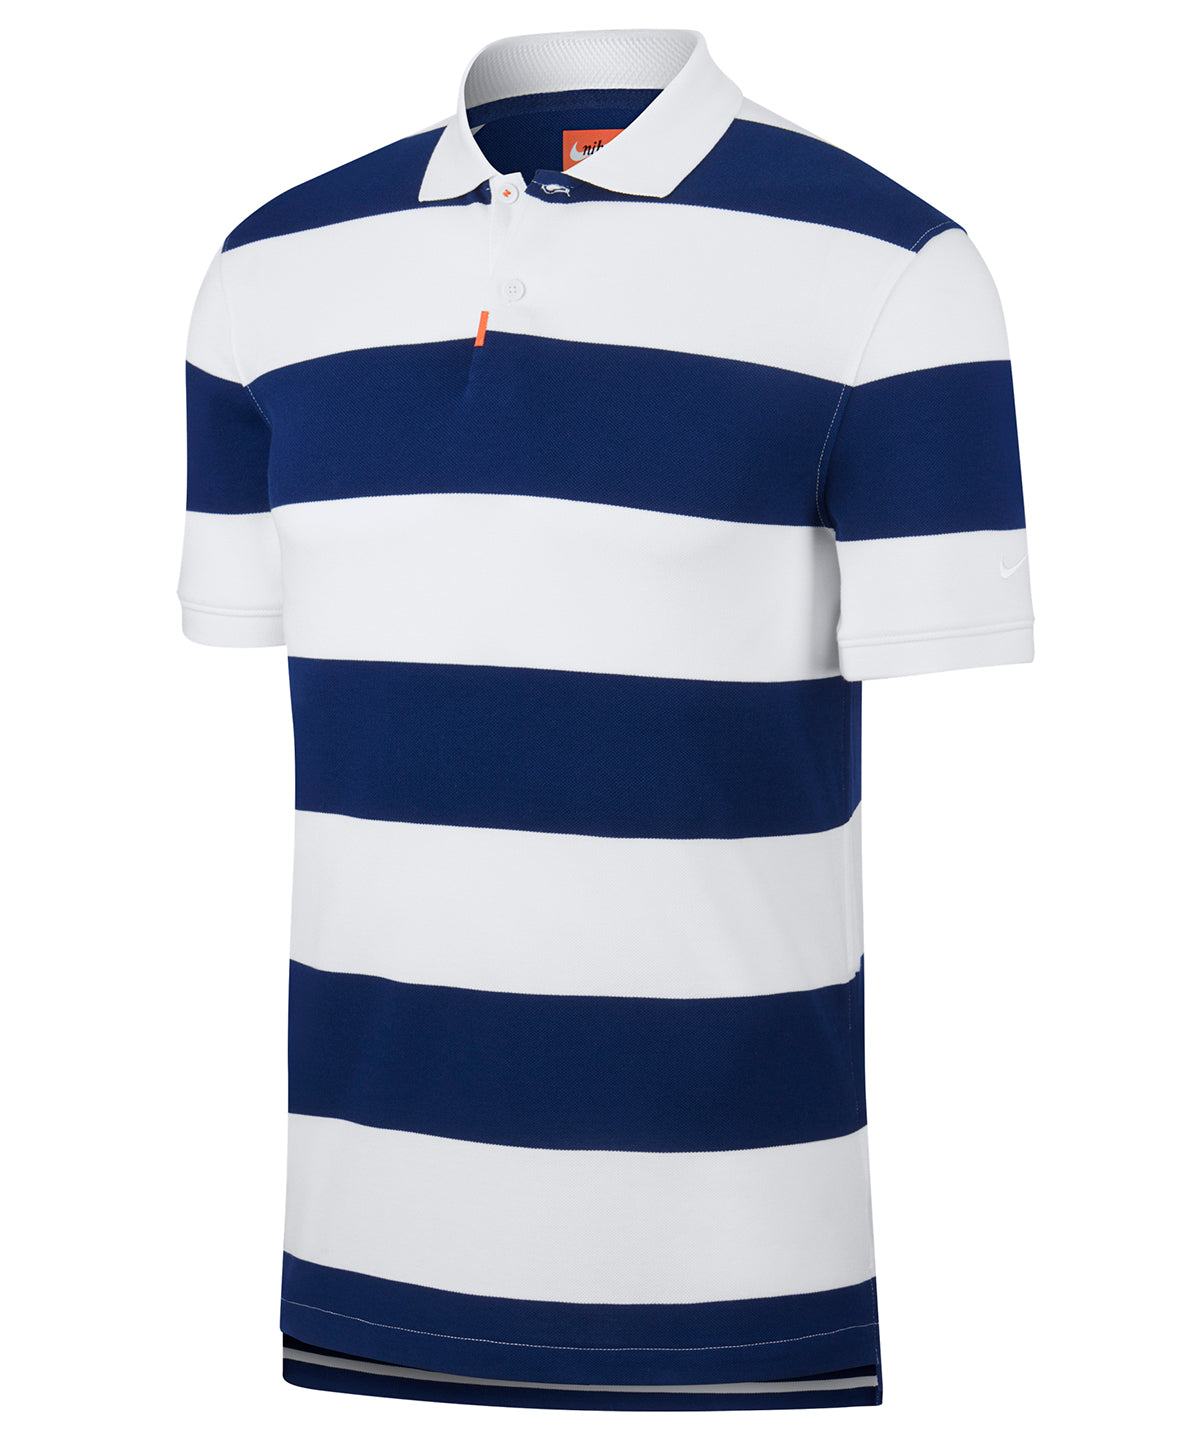 Personalised Polo Shirts - Stripes Nike The Nike polo golf stripe slim